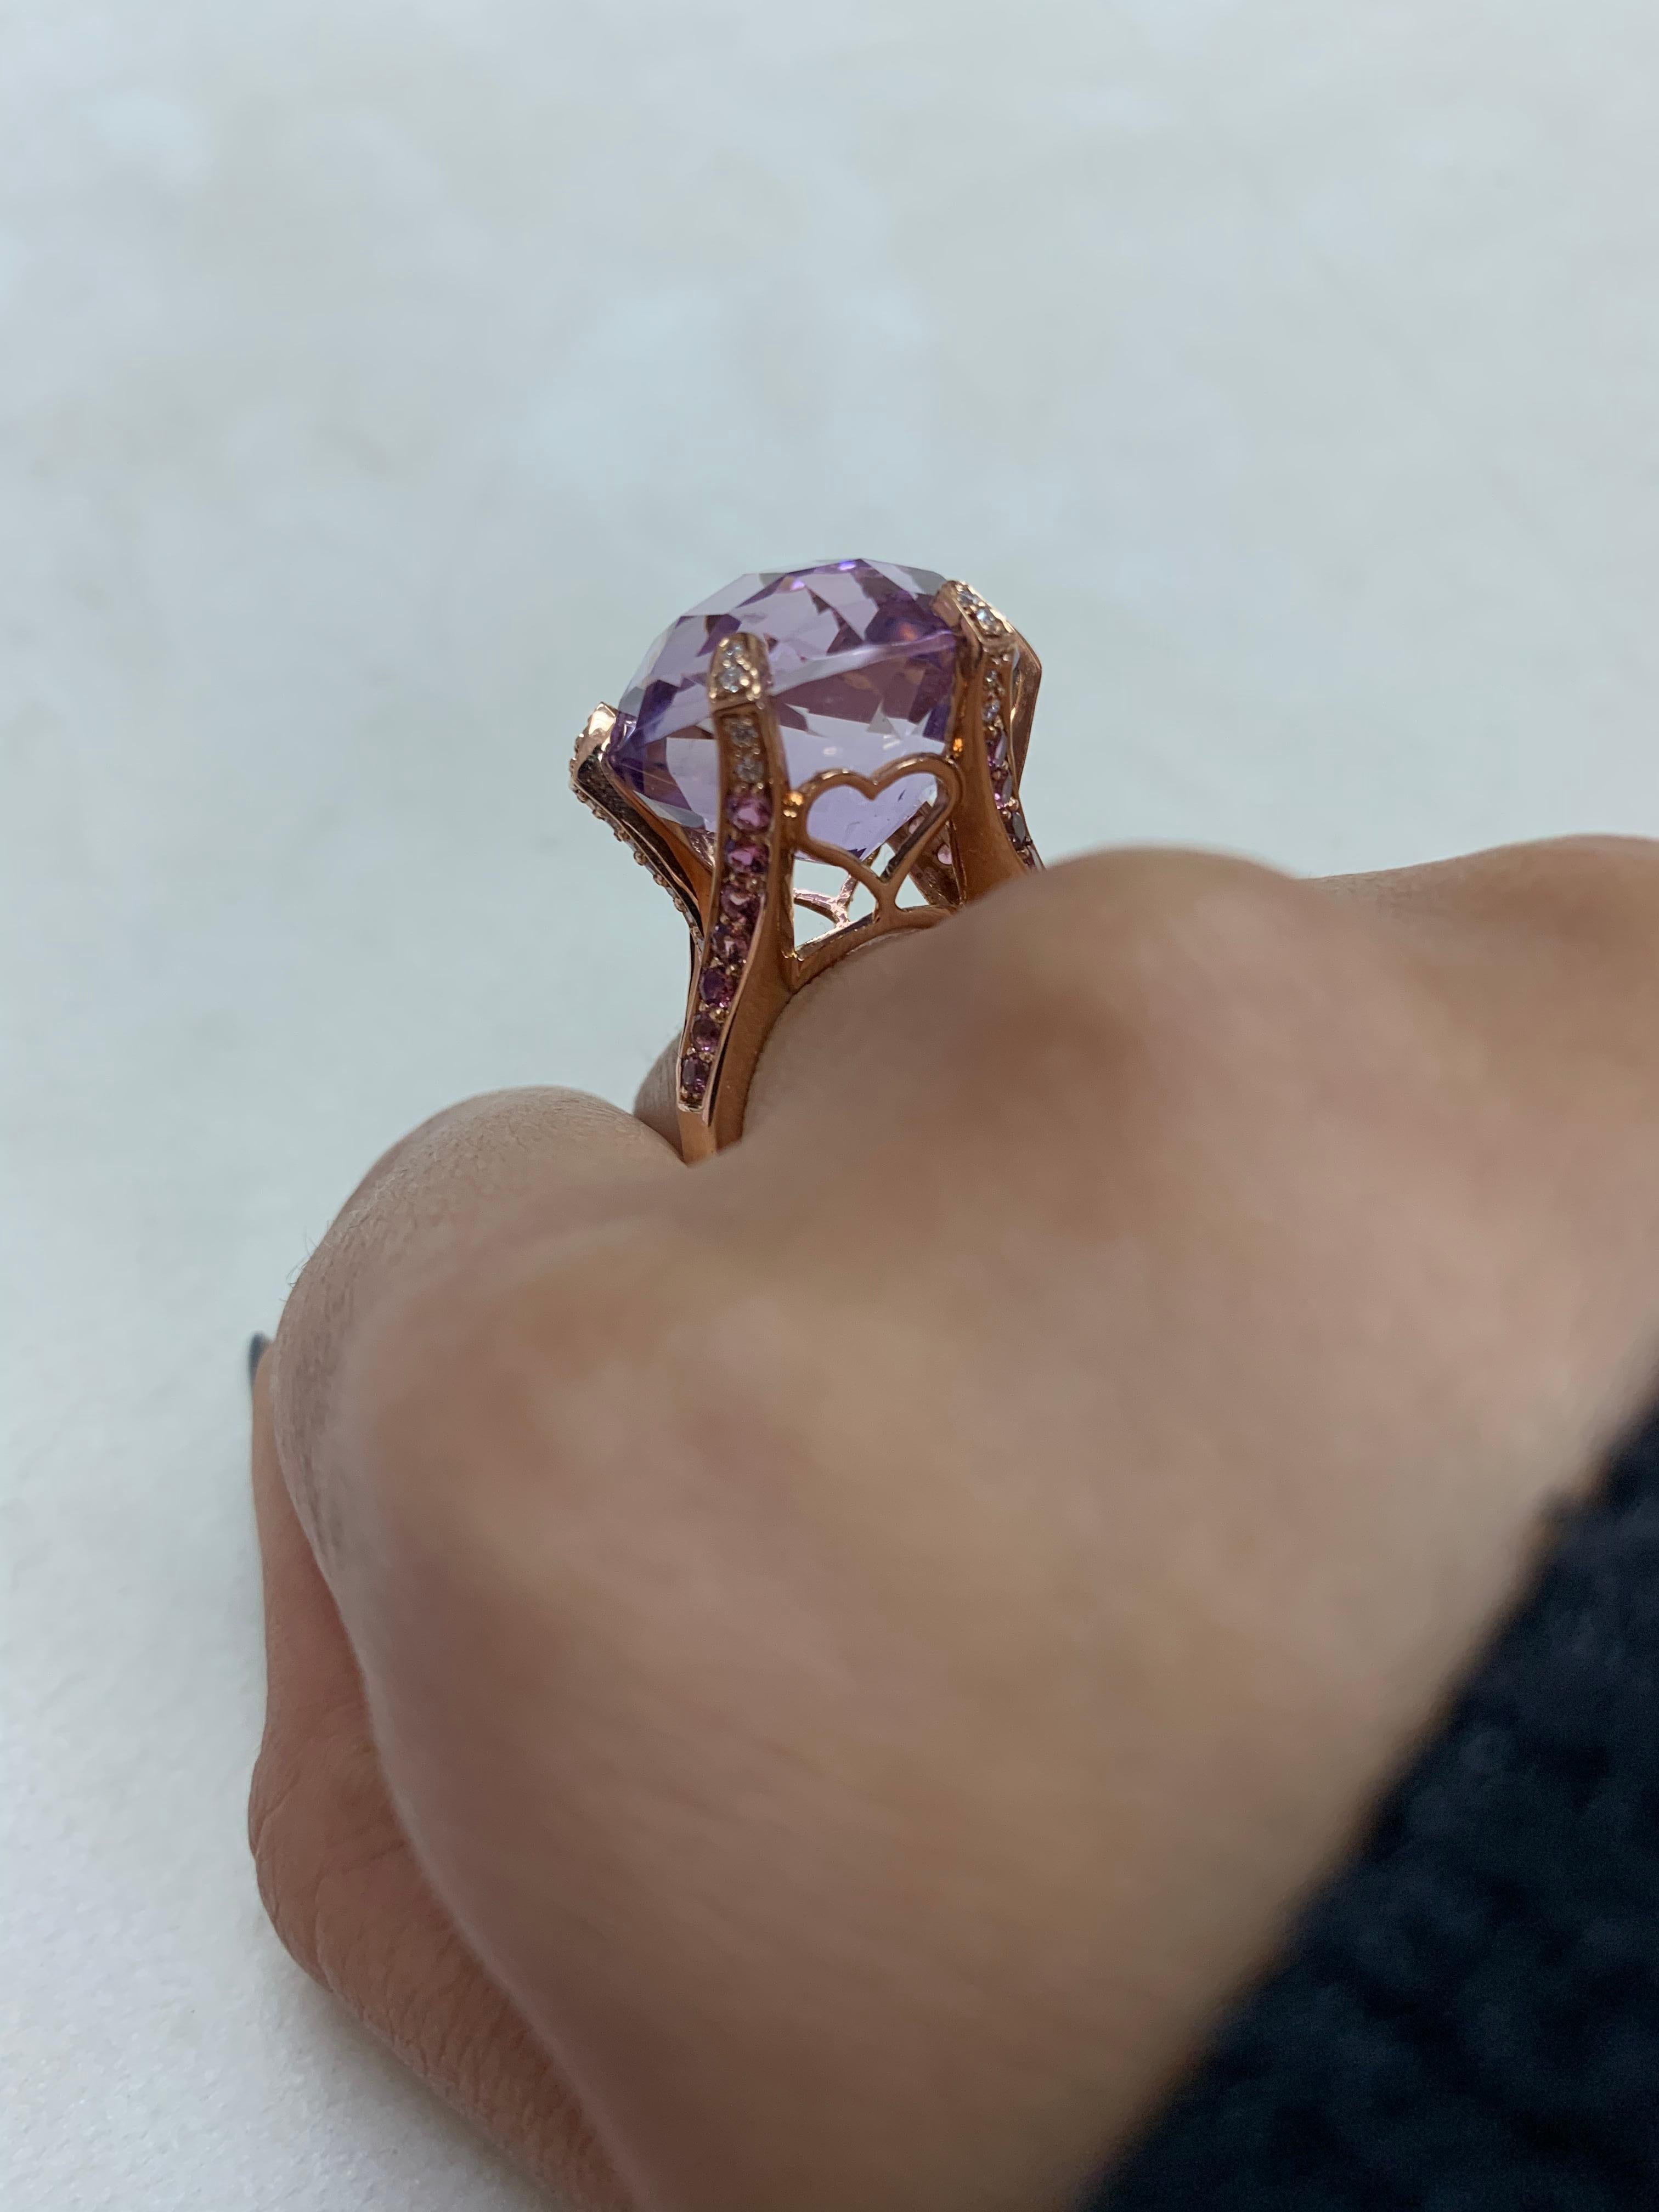 19.3 Carat Amethyst Ring in 14 Karat Rose Gold with Diamonds and Pink Tourmaline 2